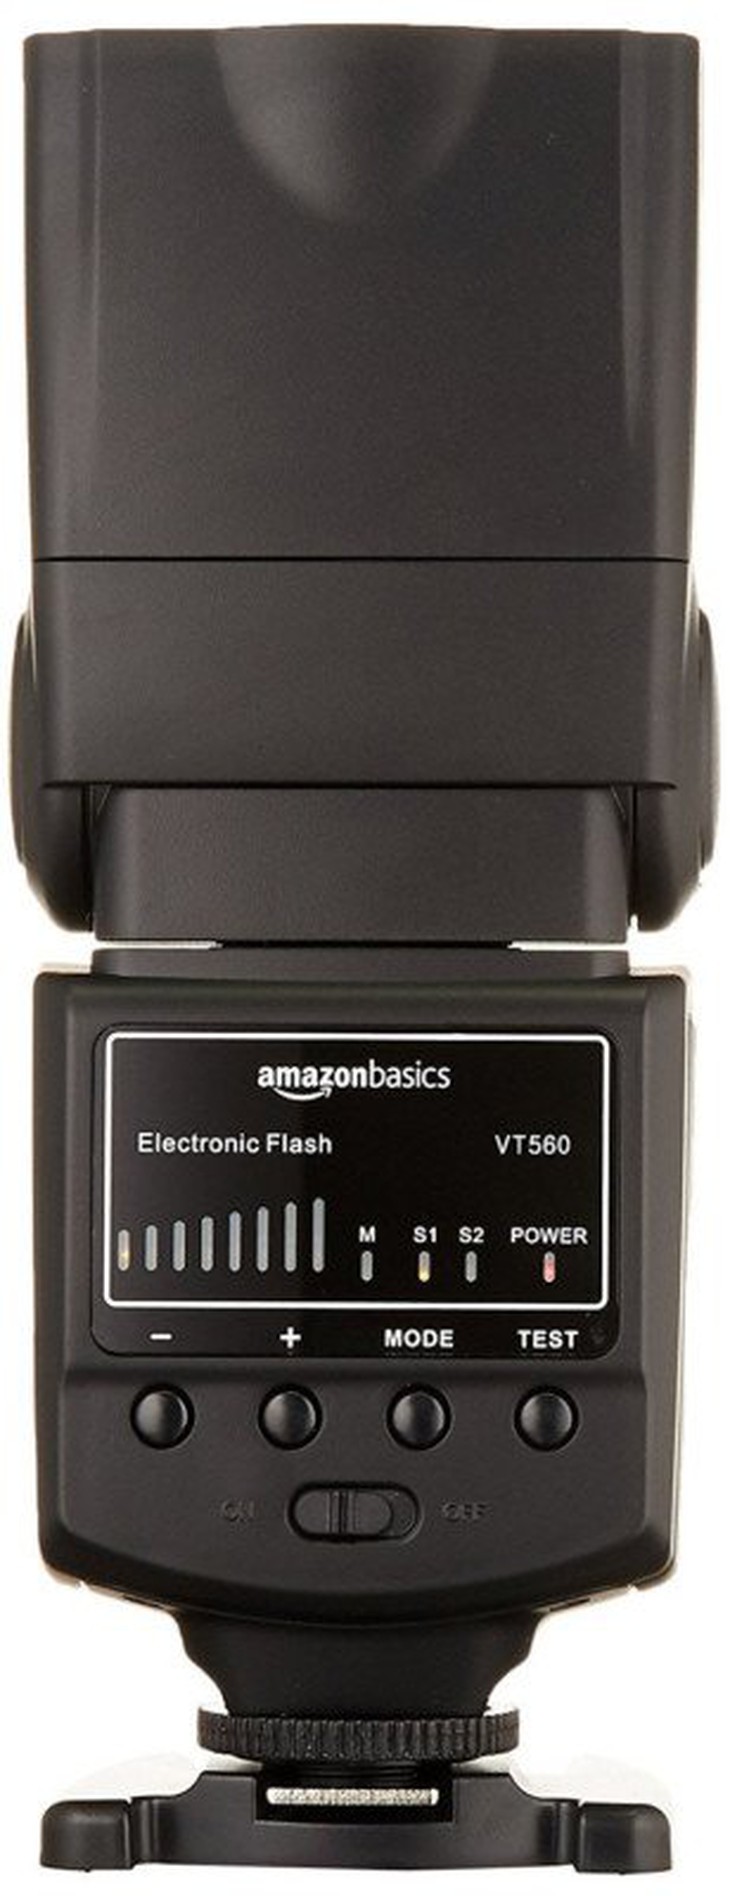 Amazon tung ra đèn flash AmazonBasics giá chỉ 28 USD - Ảnh 3.